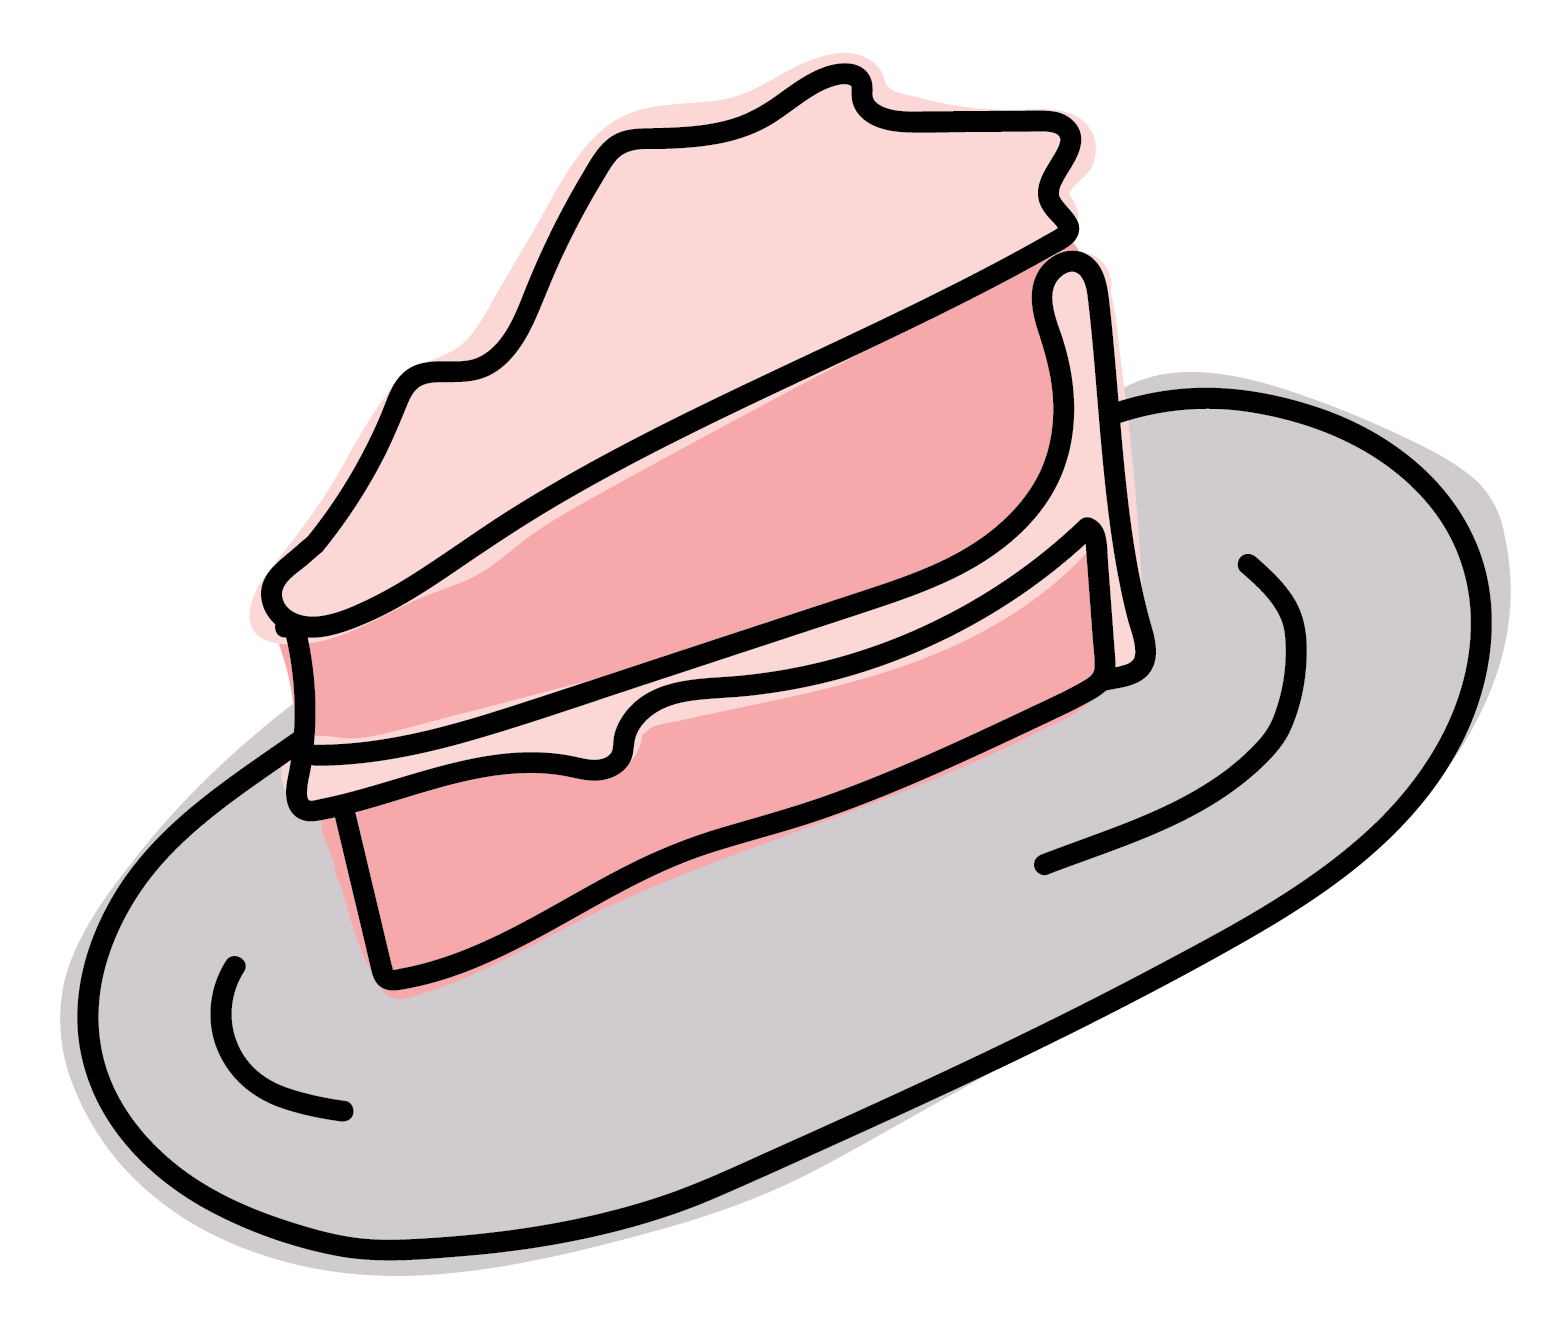 slicecake